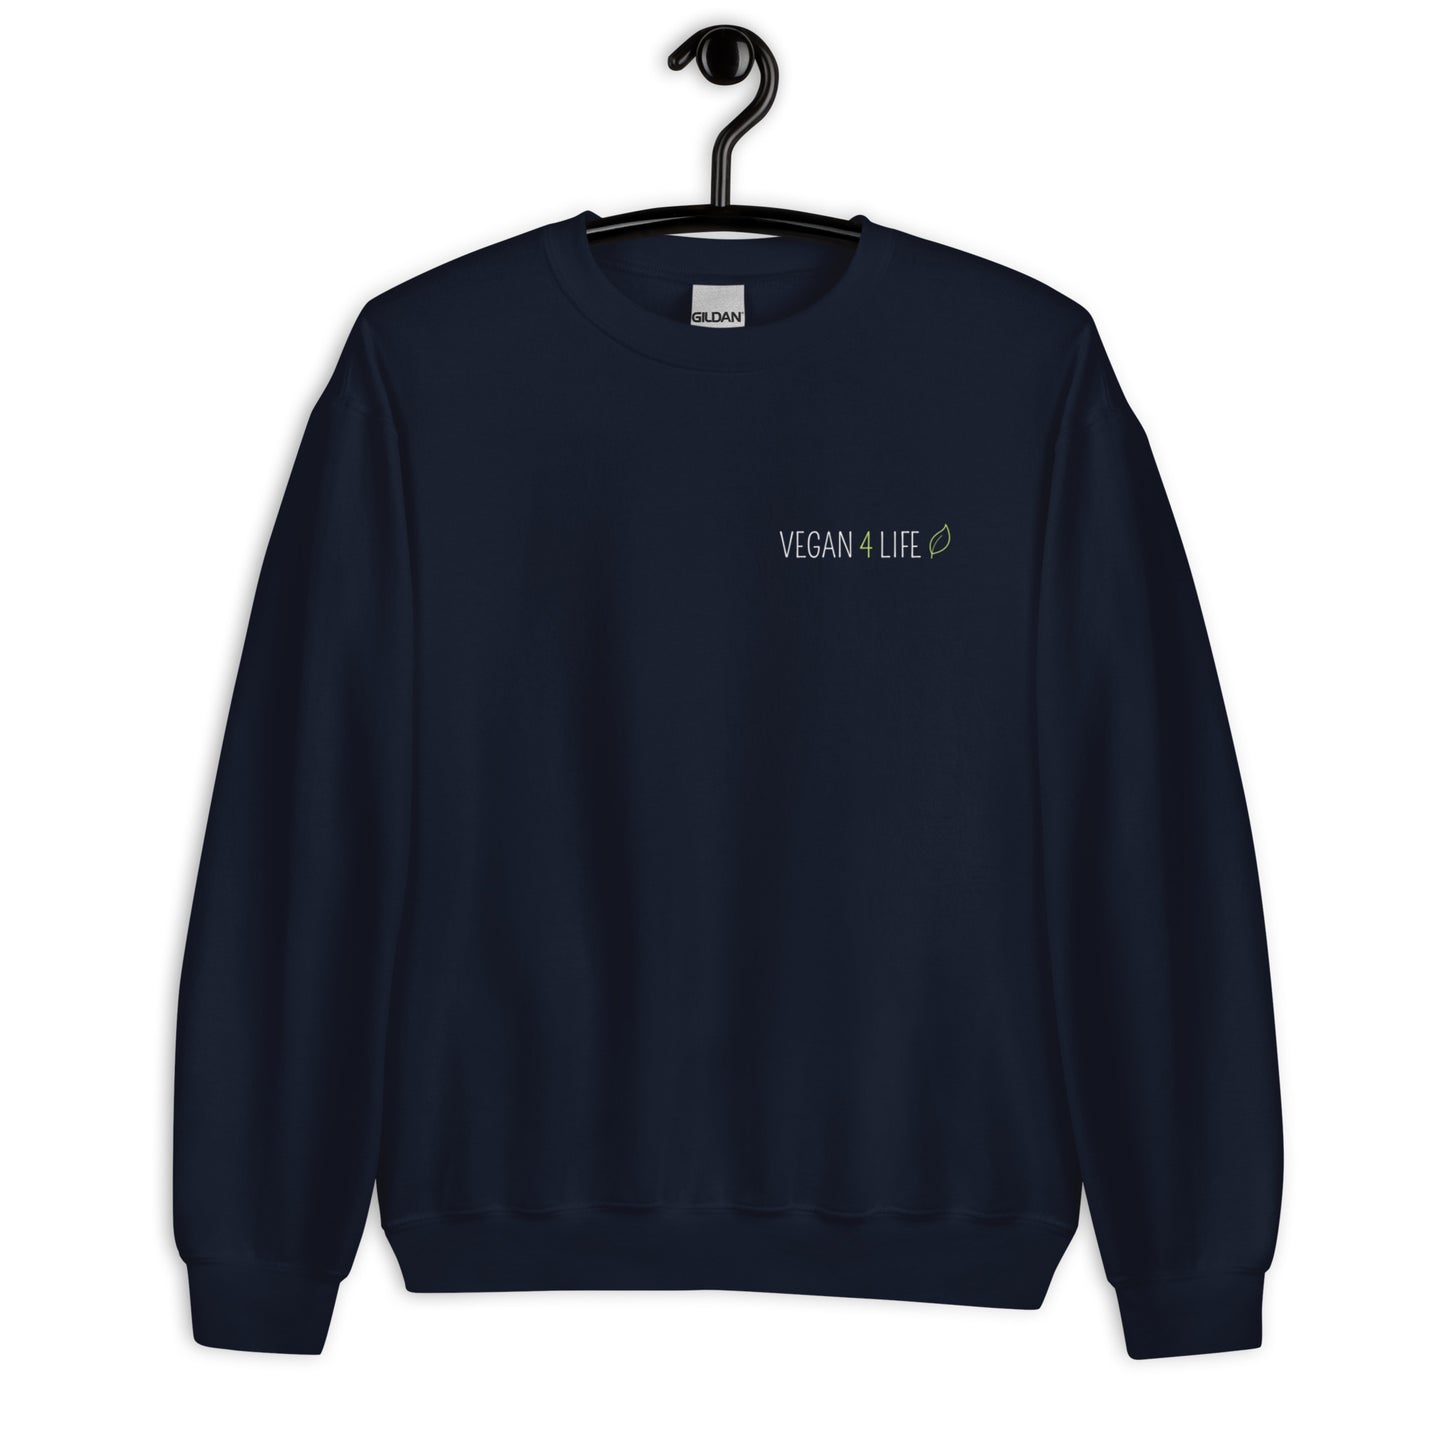 Vegan 4 Life - Unisex Sweatshirt